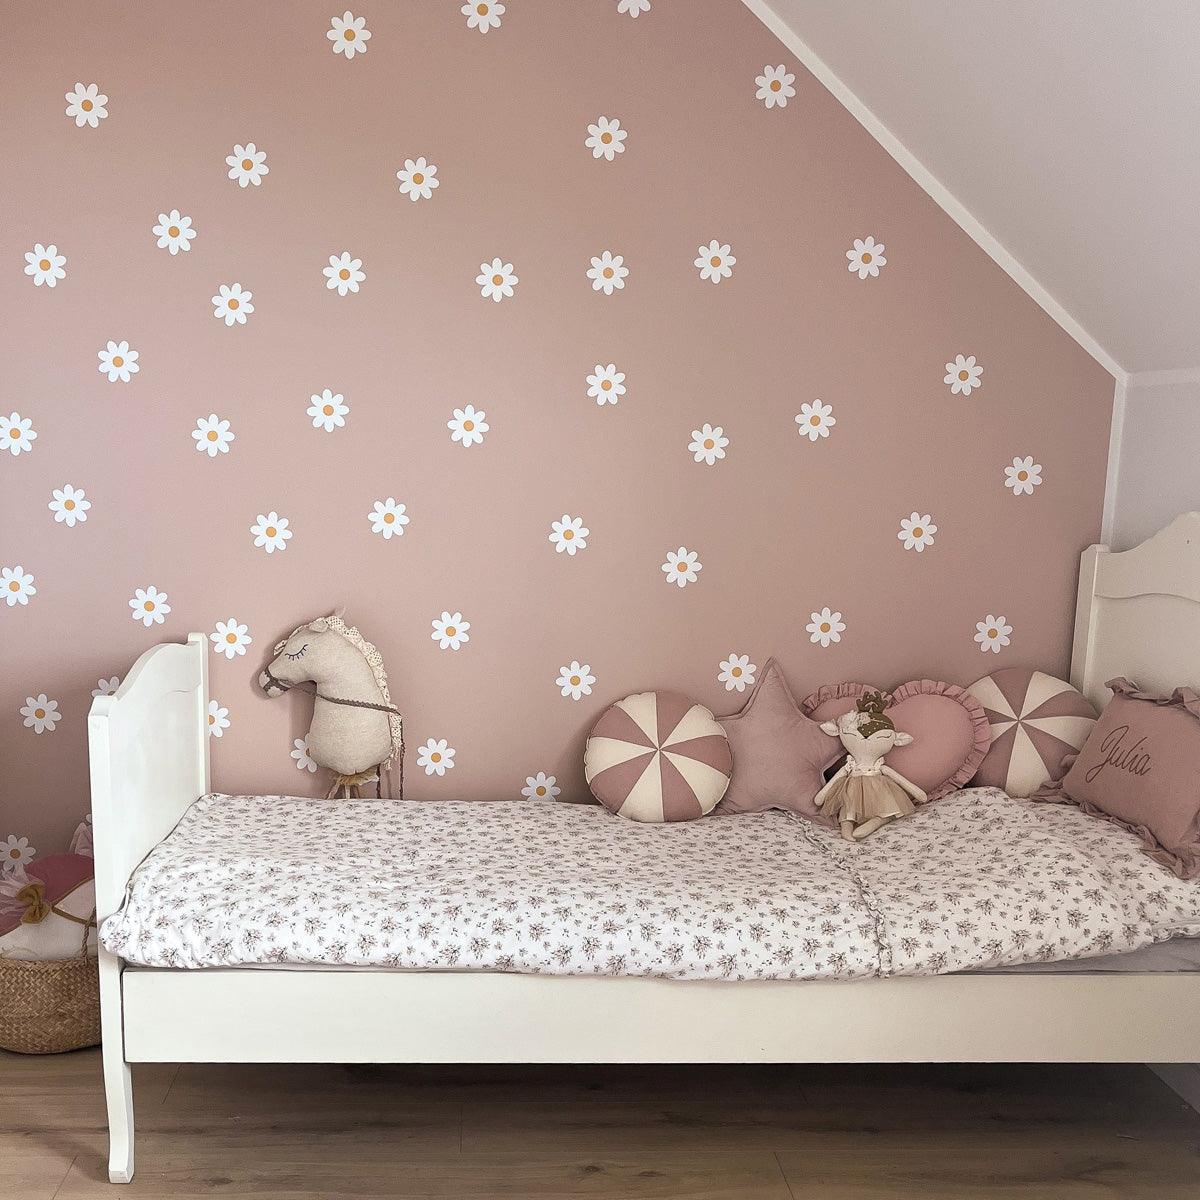 Wandtattoo Kinderzimmer - Gänseblümchen Weiß 50 Stk - Nook' d' Mel - Kinder Concept Store